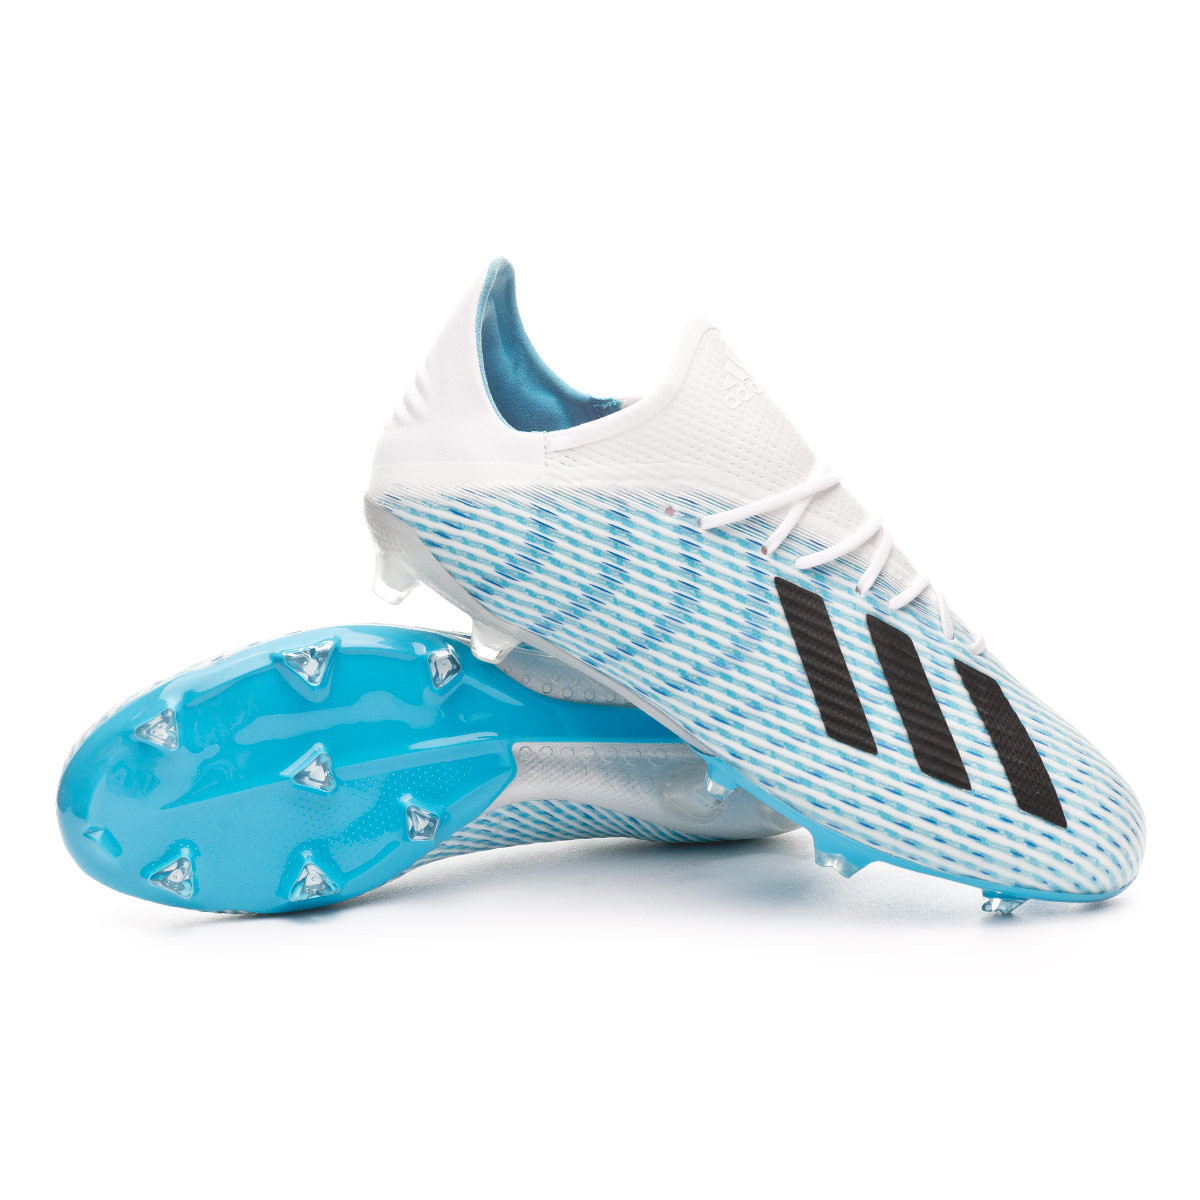 Football Boots adidas X 19.2 FG Bright 